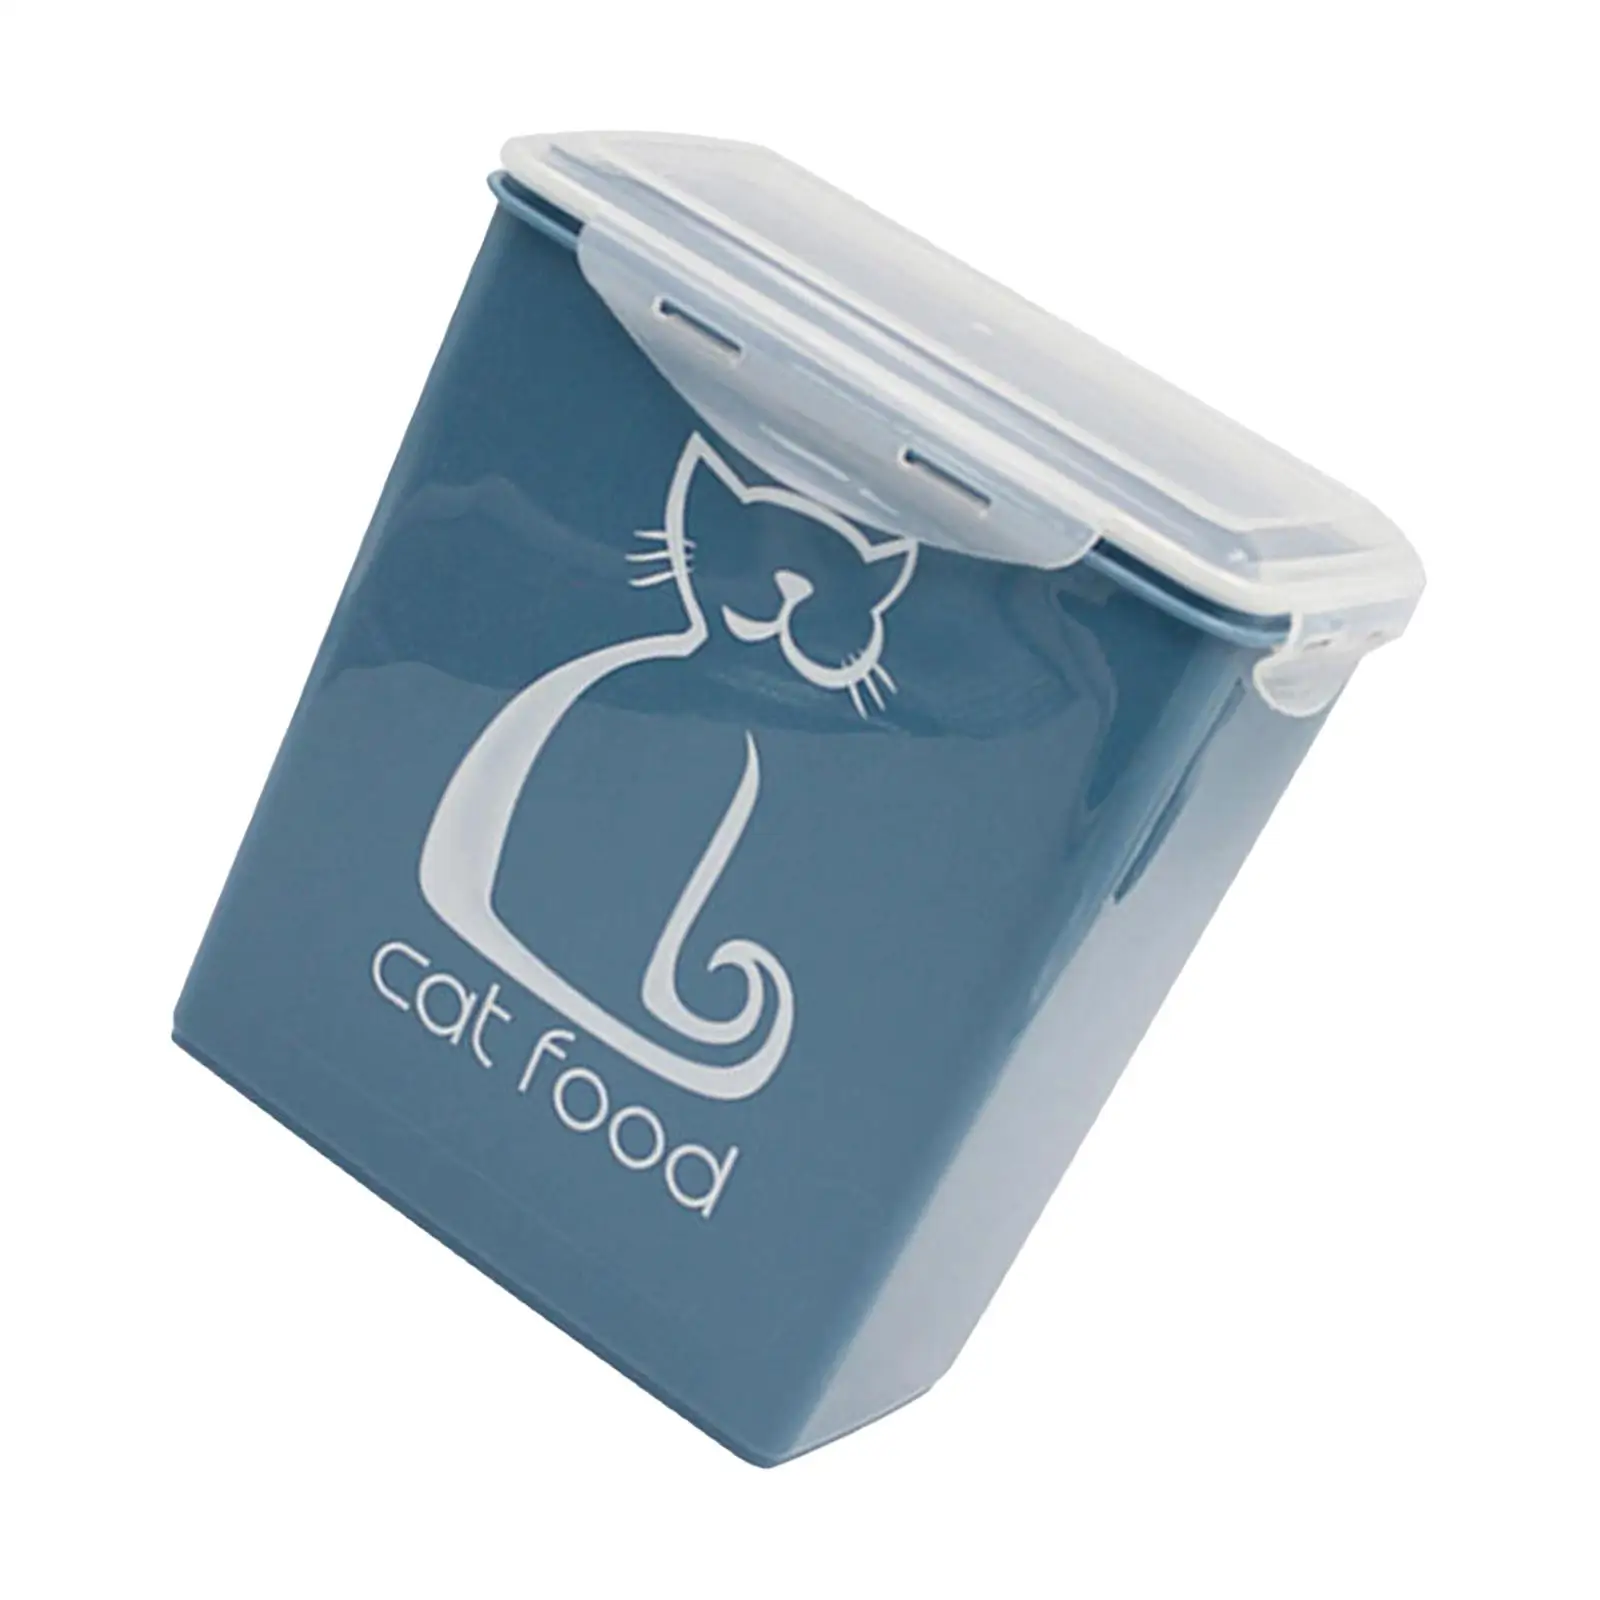 5L Large Pet Dog Food Storage Container Rice Bin Dry Food Dispenser Organizer Kitchen Airtight Tank Cat Food Storage Bucket